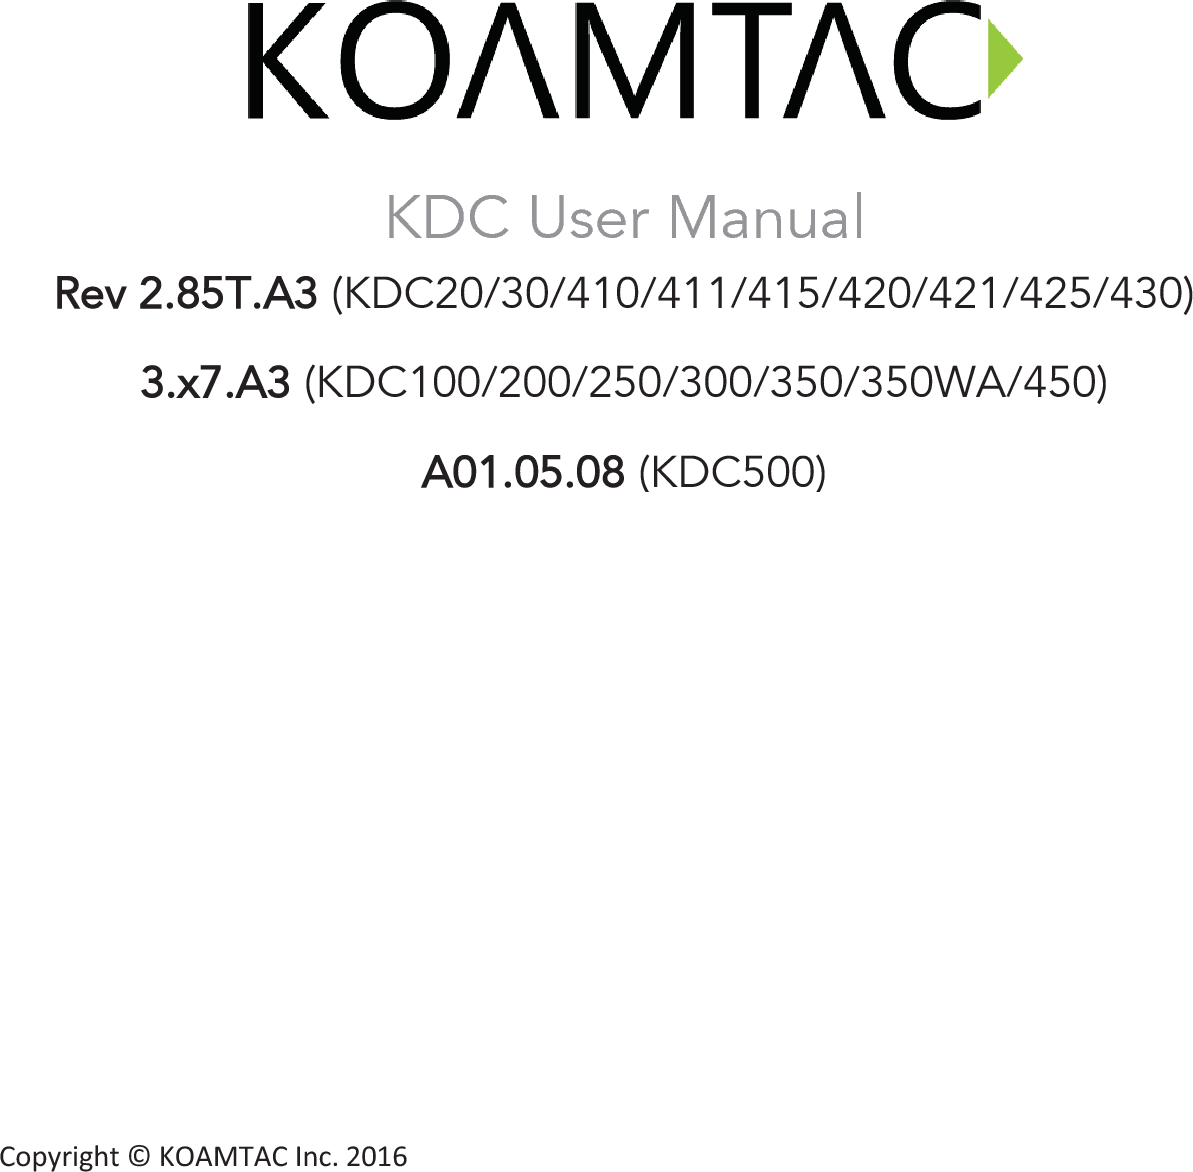                   Copyright © KOAMTAC Inc. 2016KDC User Manual  RRev 2.85T.A3 (KDC20/30/410/411/415/420/421/425/430) 3.x7.A3 (KDC100/200/250/300/350/350WA/450) A001.05.08 (KDC500) 